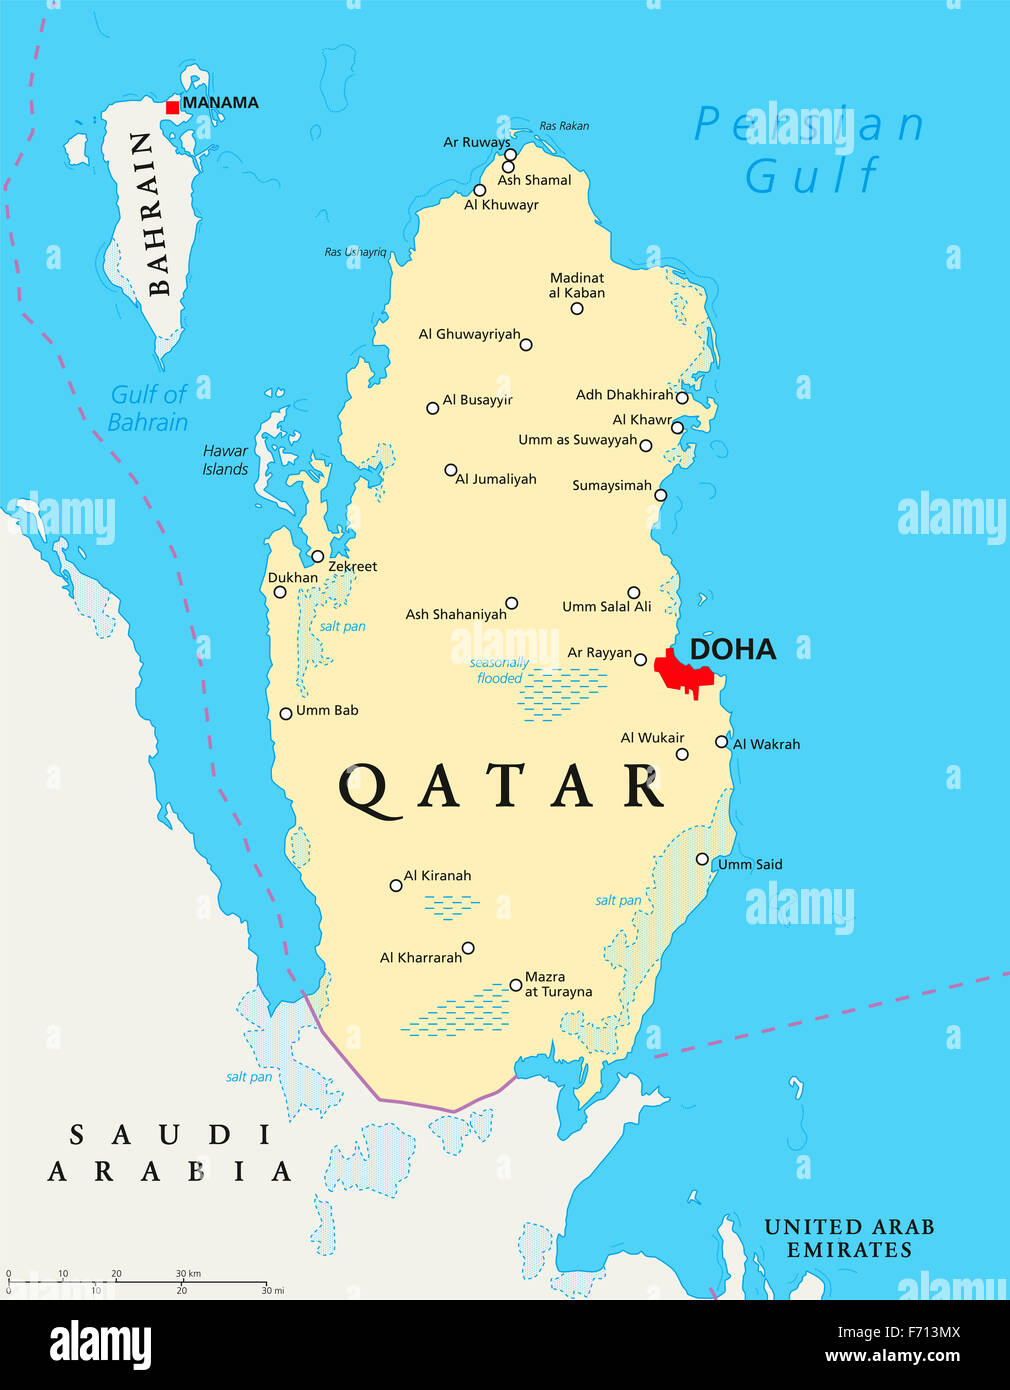 qatar capitale